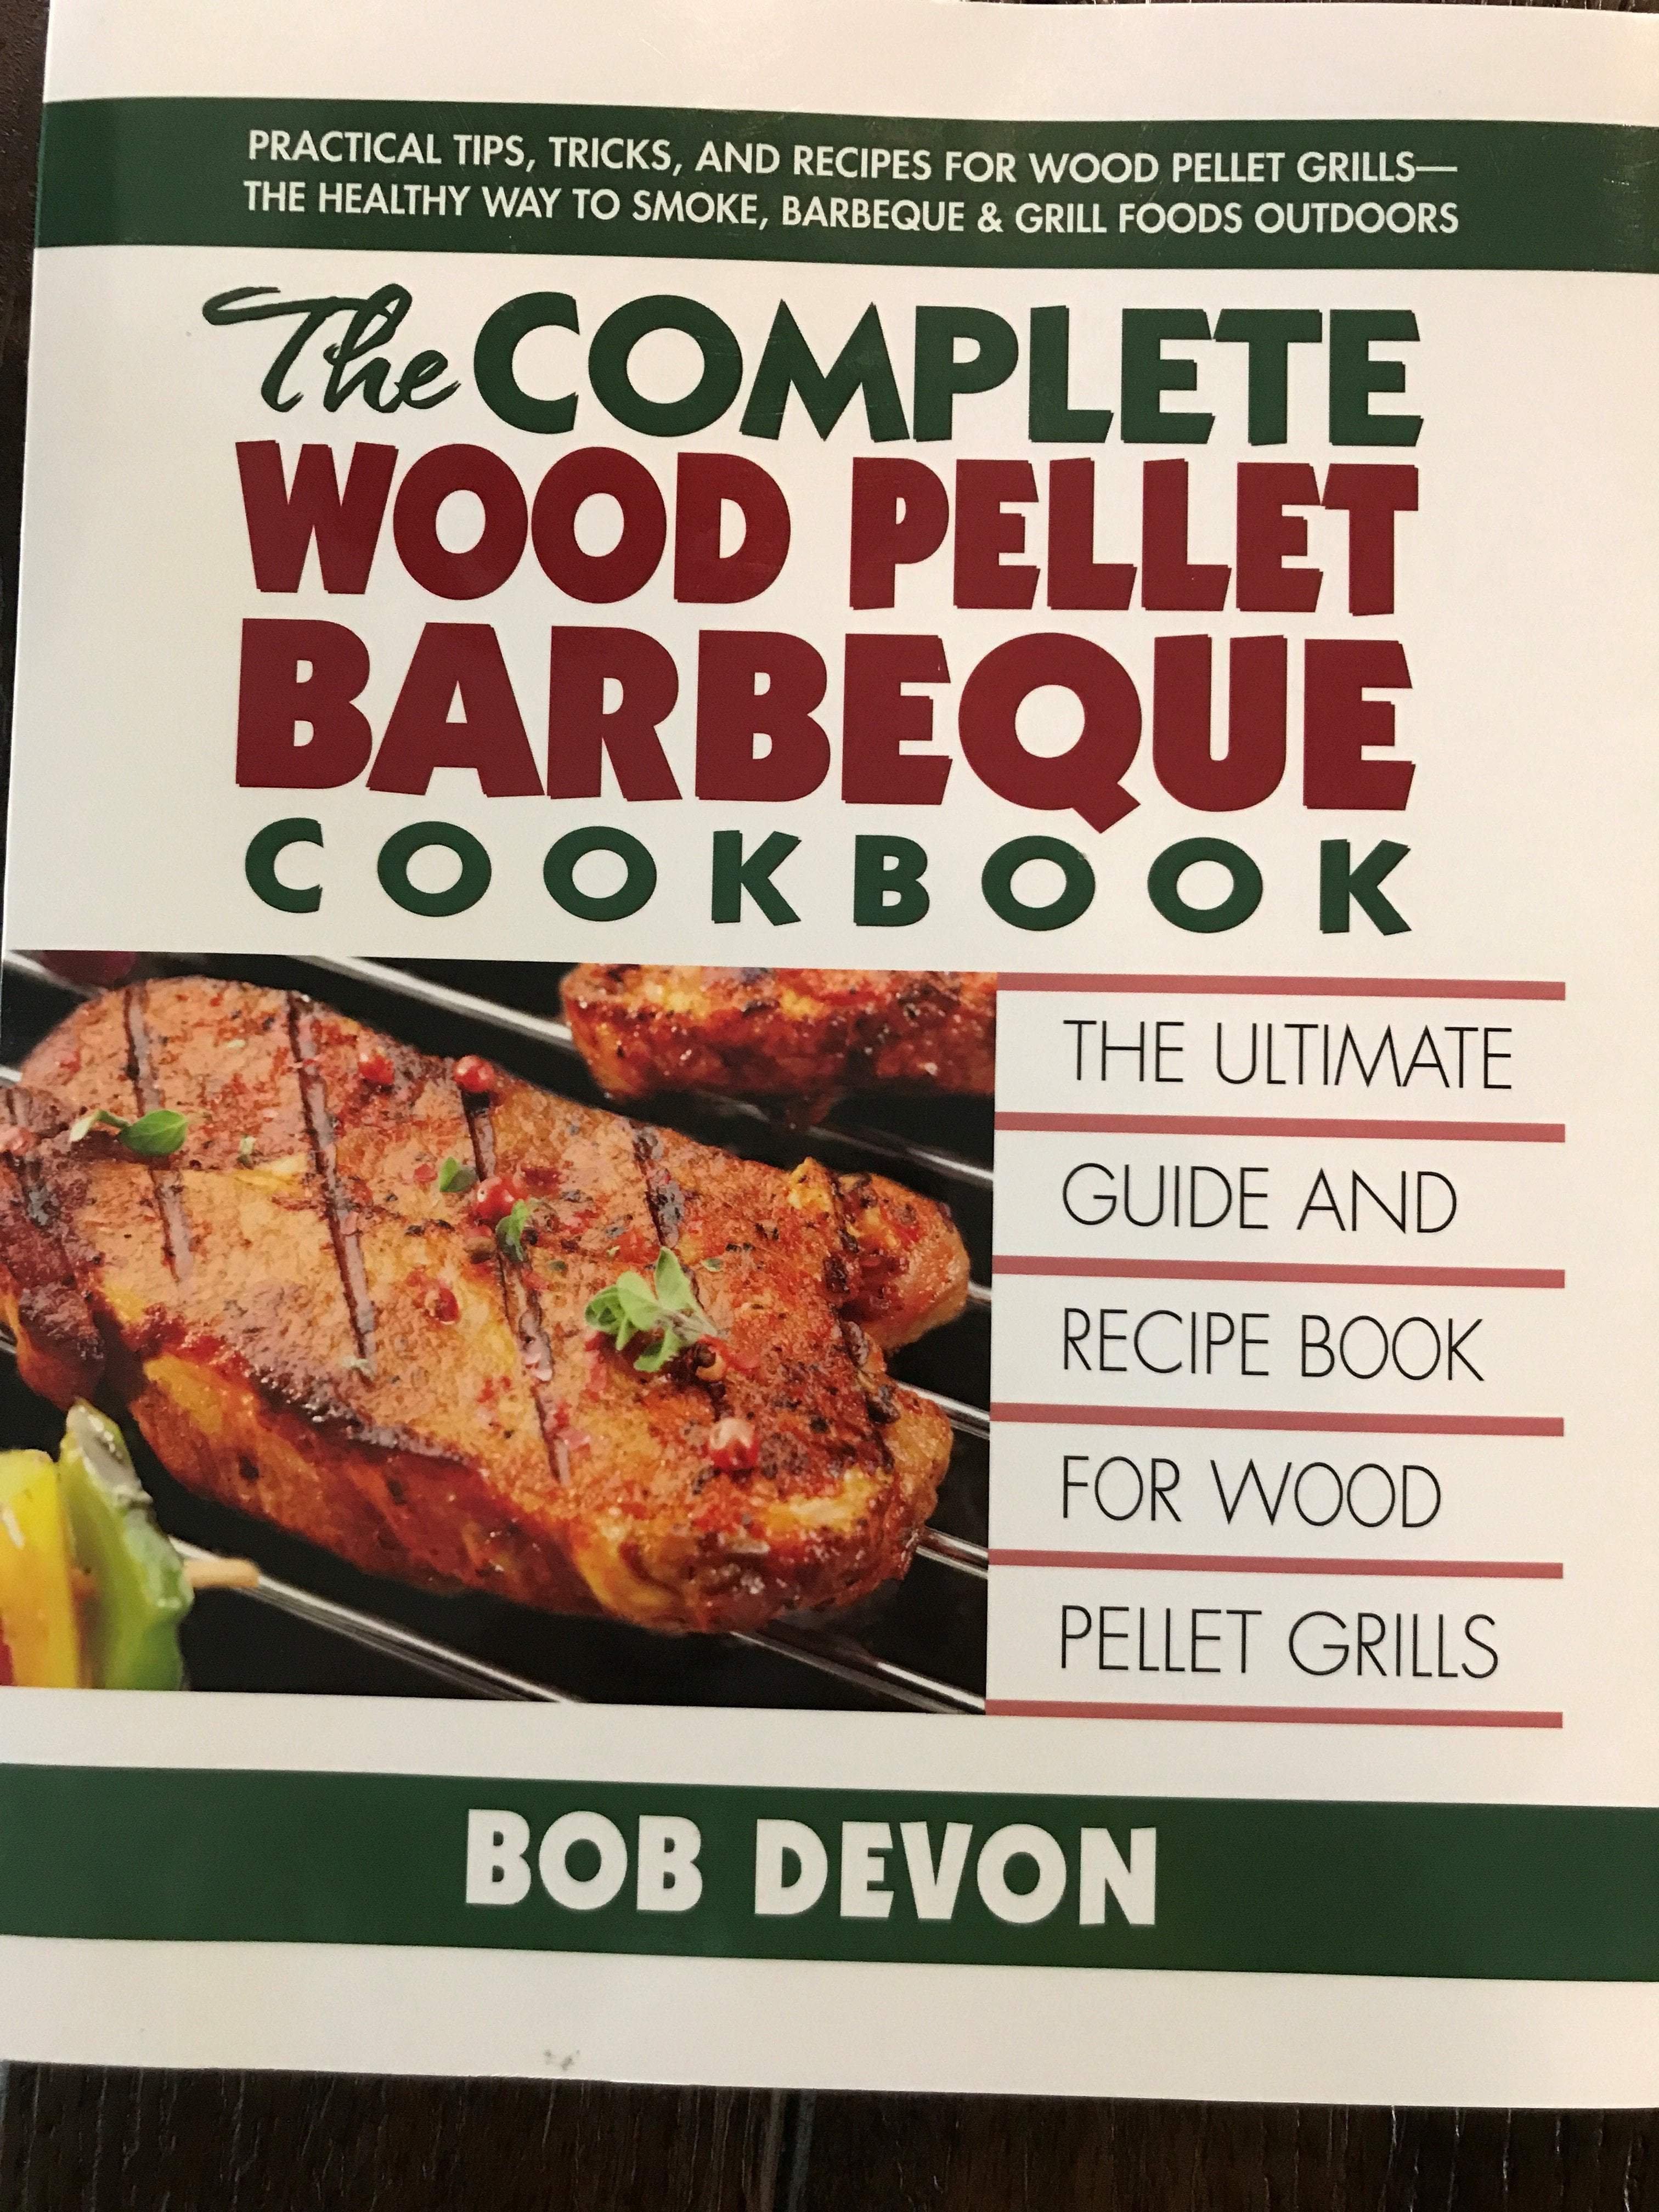 Can't Beat A Cookbook